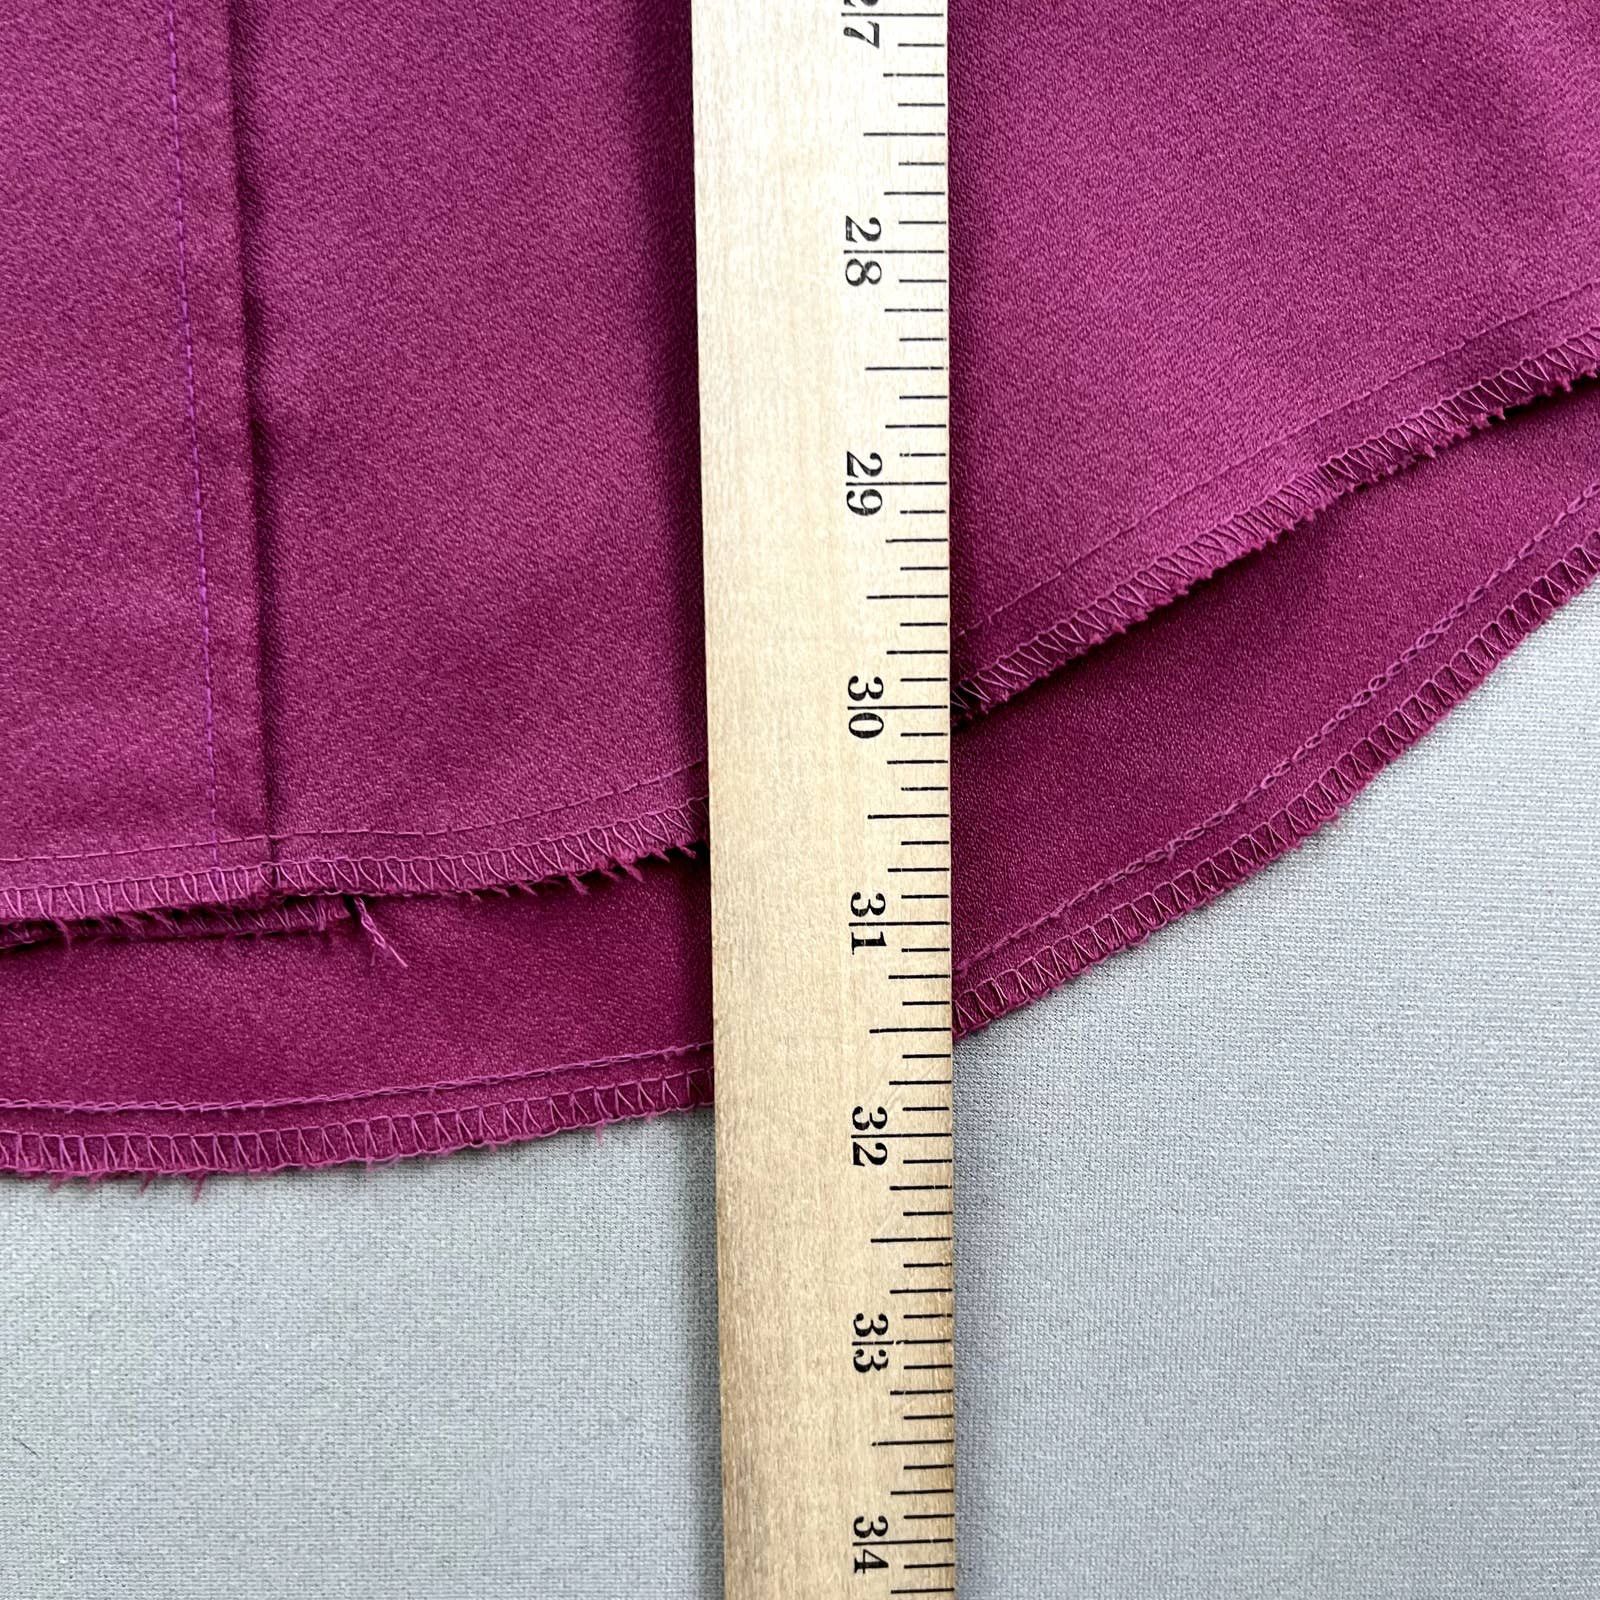 Vintage Vintage Champion Westerns Shirt Medium 15-33 Pink Pearl Snap Size US M / EU 48-50 / 2 - 8 Thumbnail